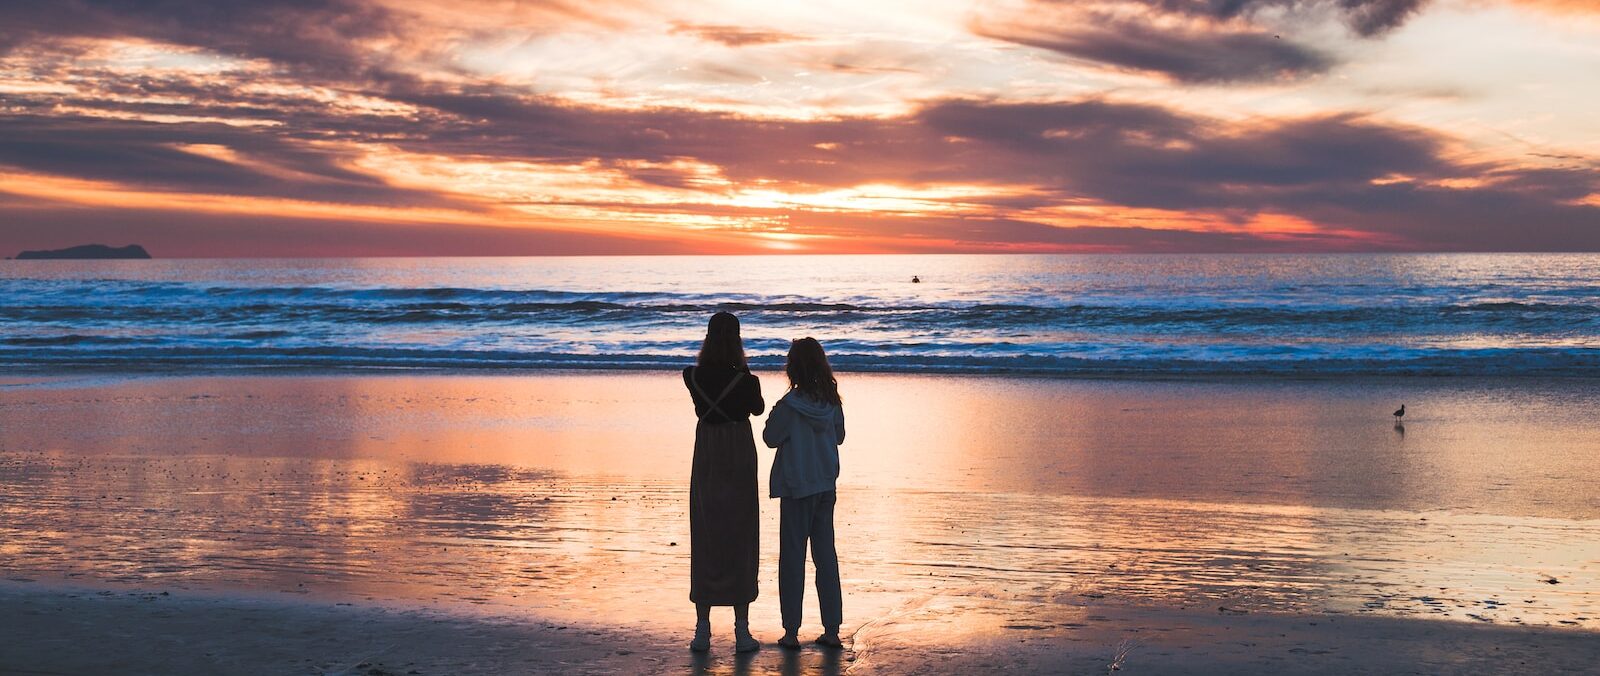 woman and girl standing on seashore